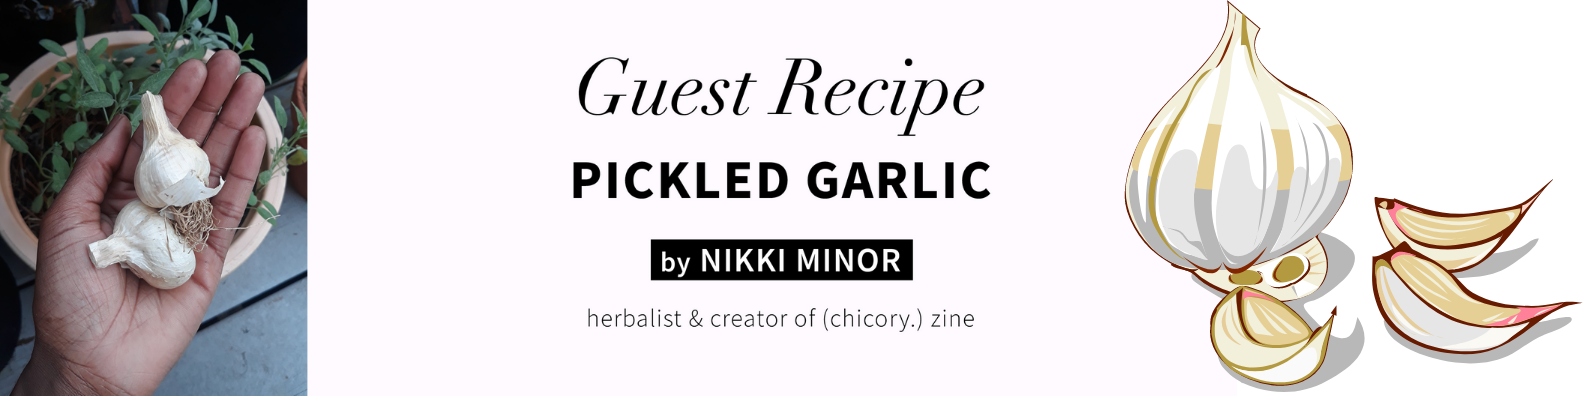 Guest Recipe: Pickled Garlic with Nikki Minor of (chicory.) zine